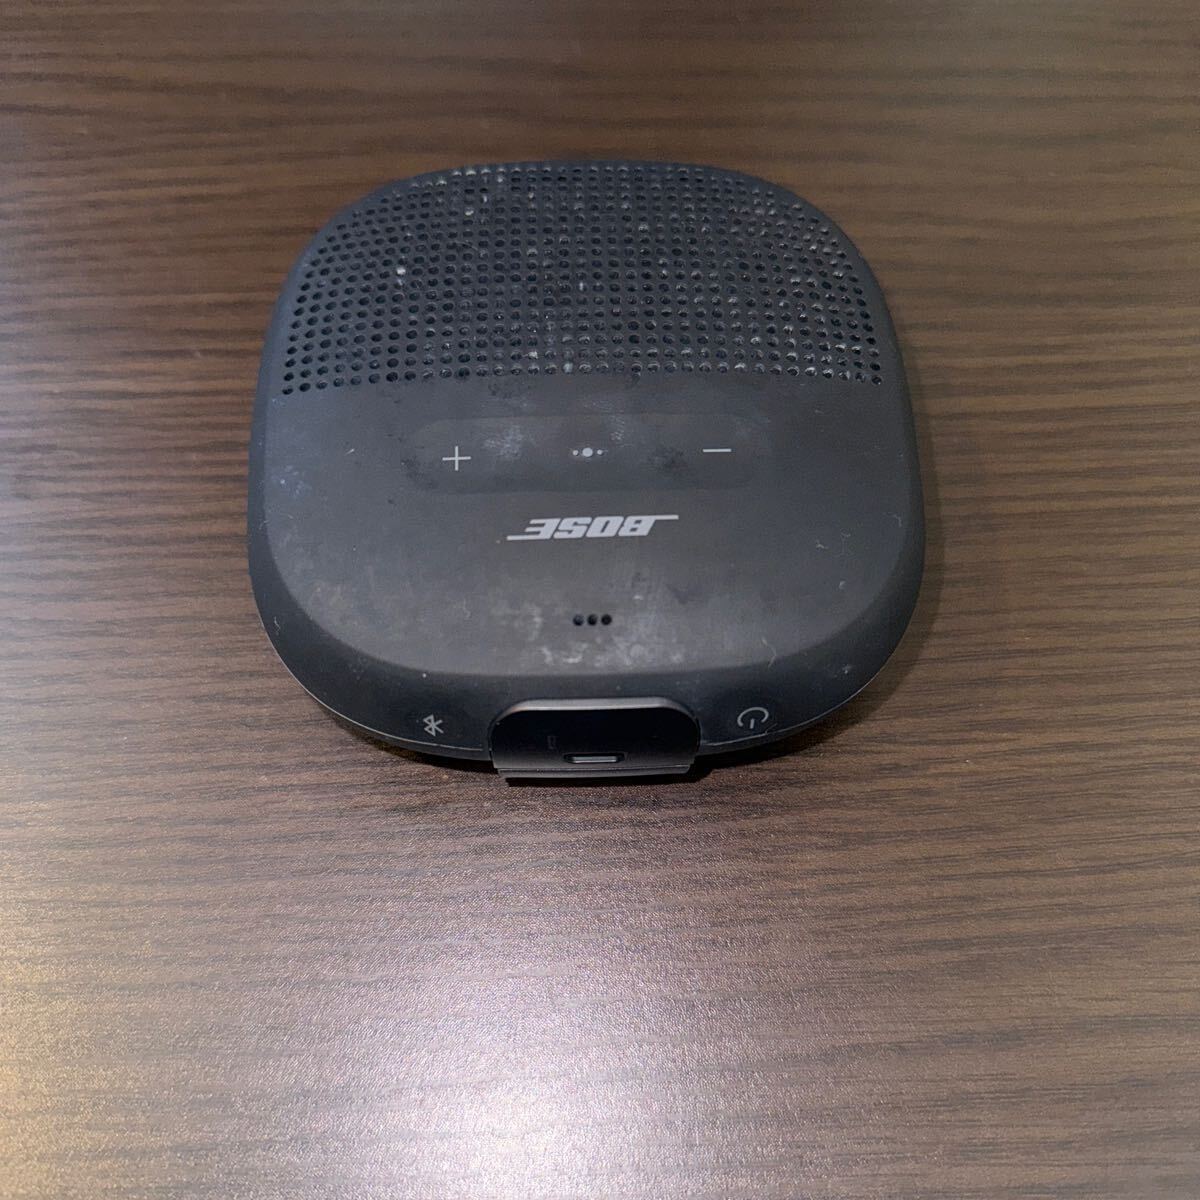 Bose SoundLink Micro Bose saun напиток микро водонепроницаемый динамик Small Portable Bluetooth Speaker Waterproof Black